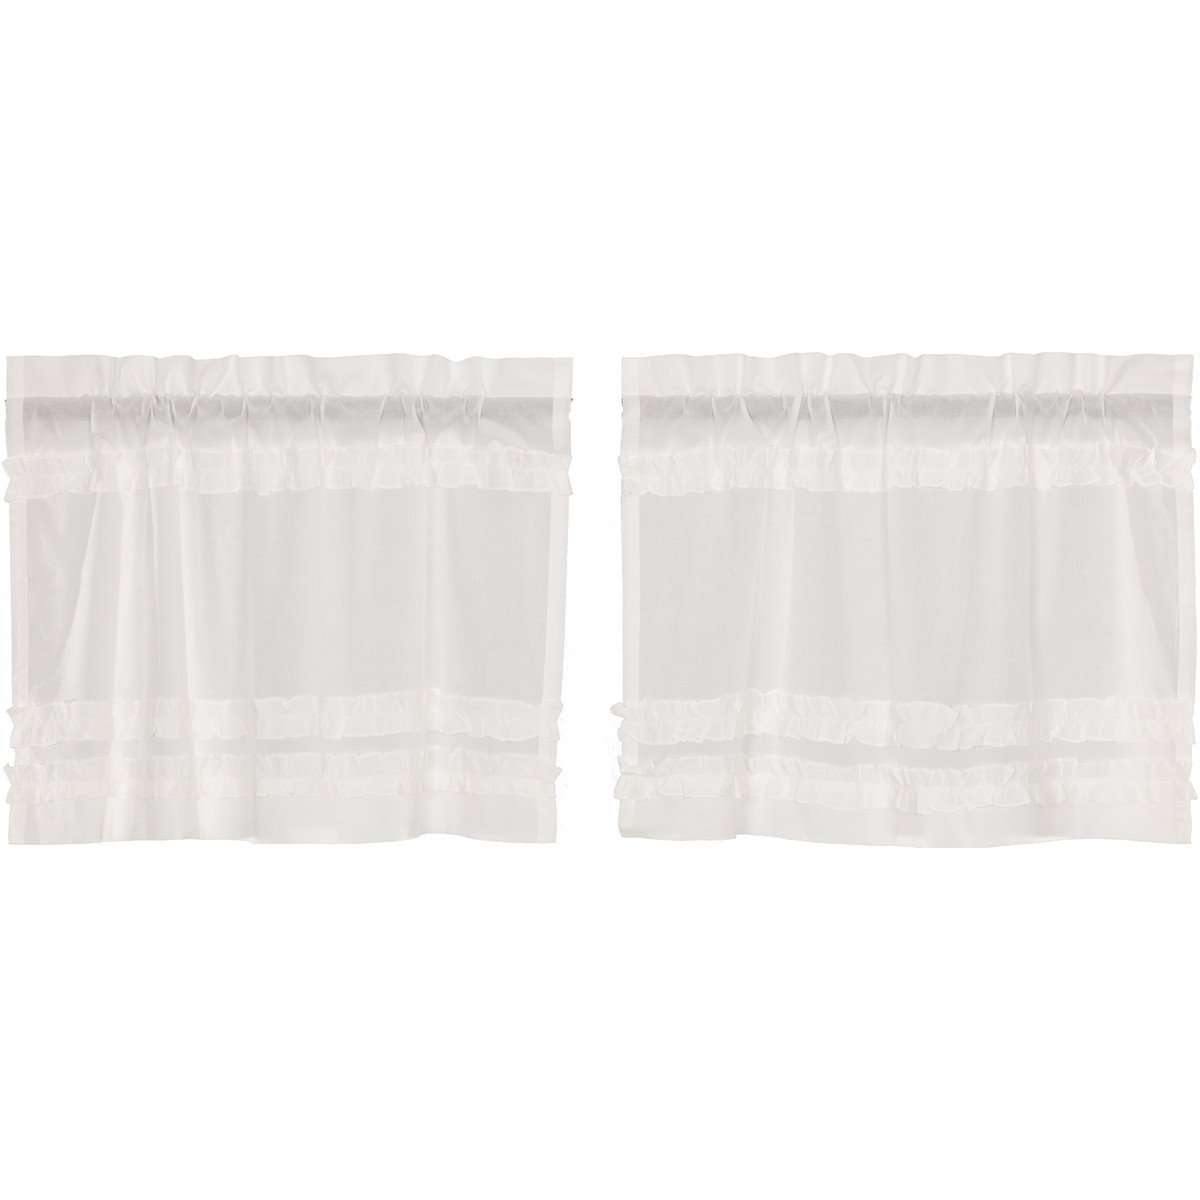 White Ruffled Sheer Petticoat Tier Curtain Set of 2 L24xW36 VHC Brands - The Fox Decor